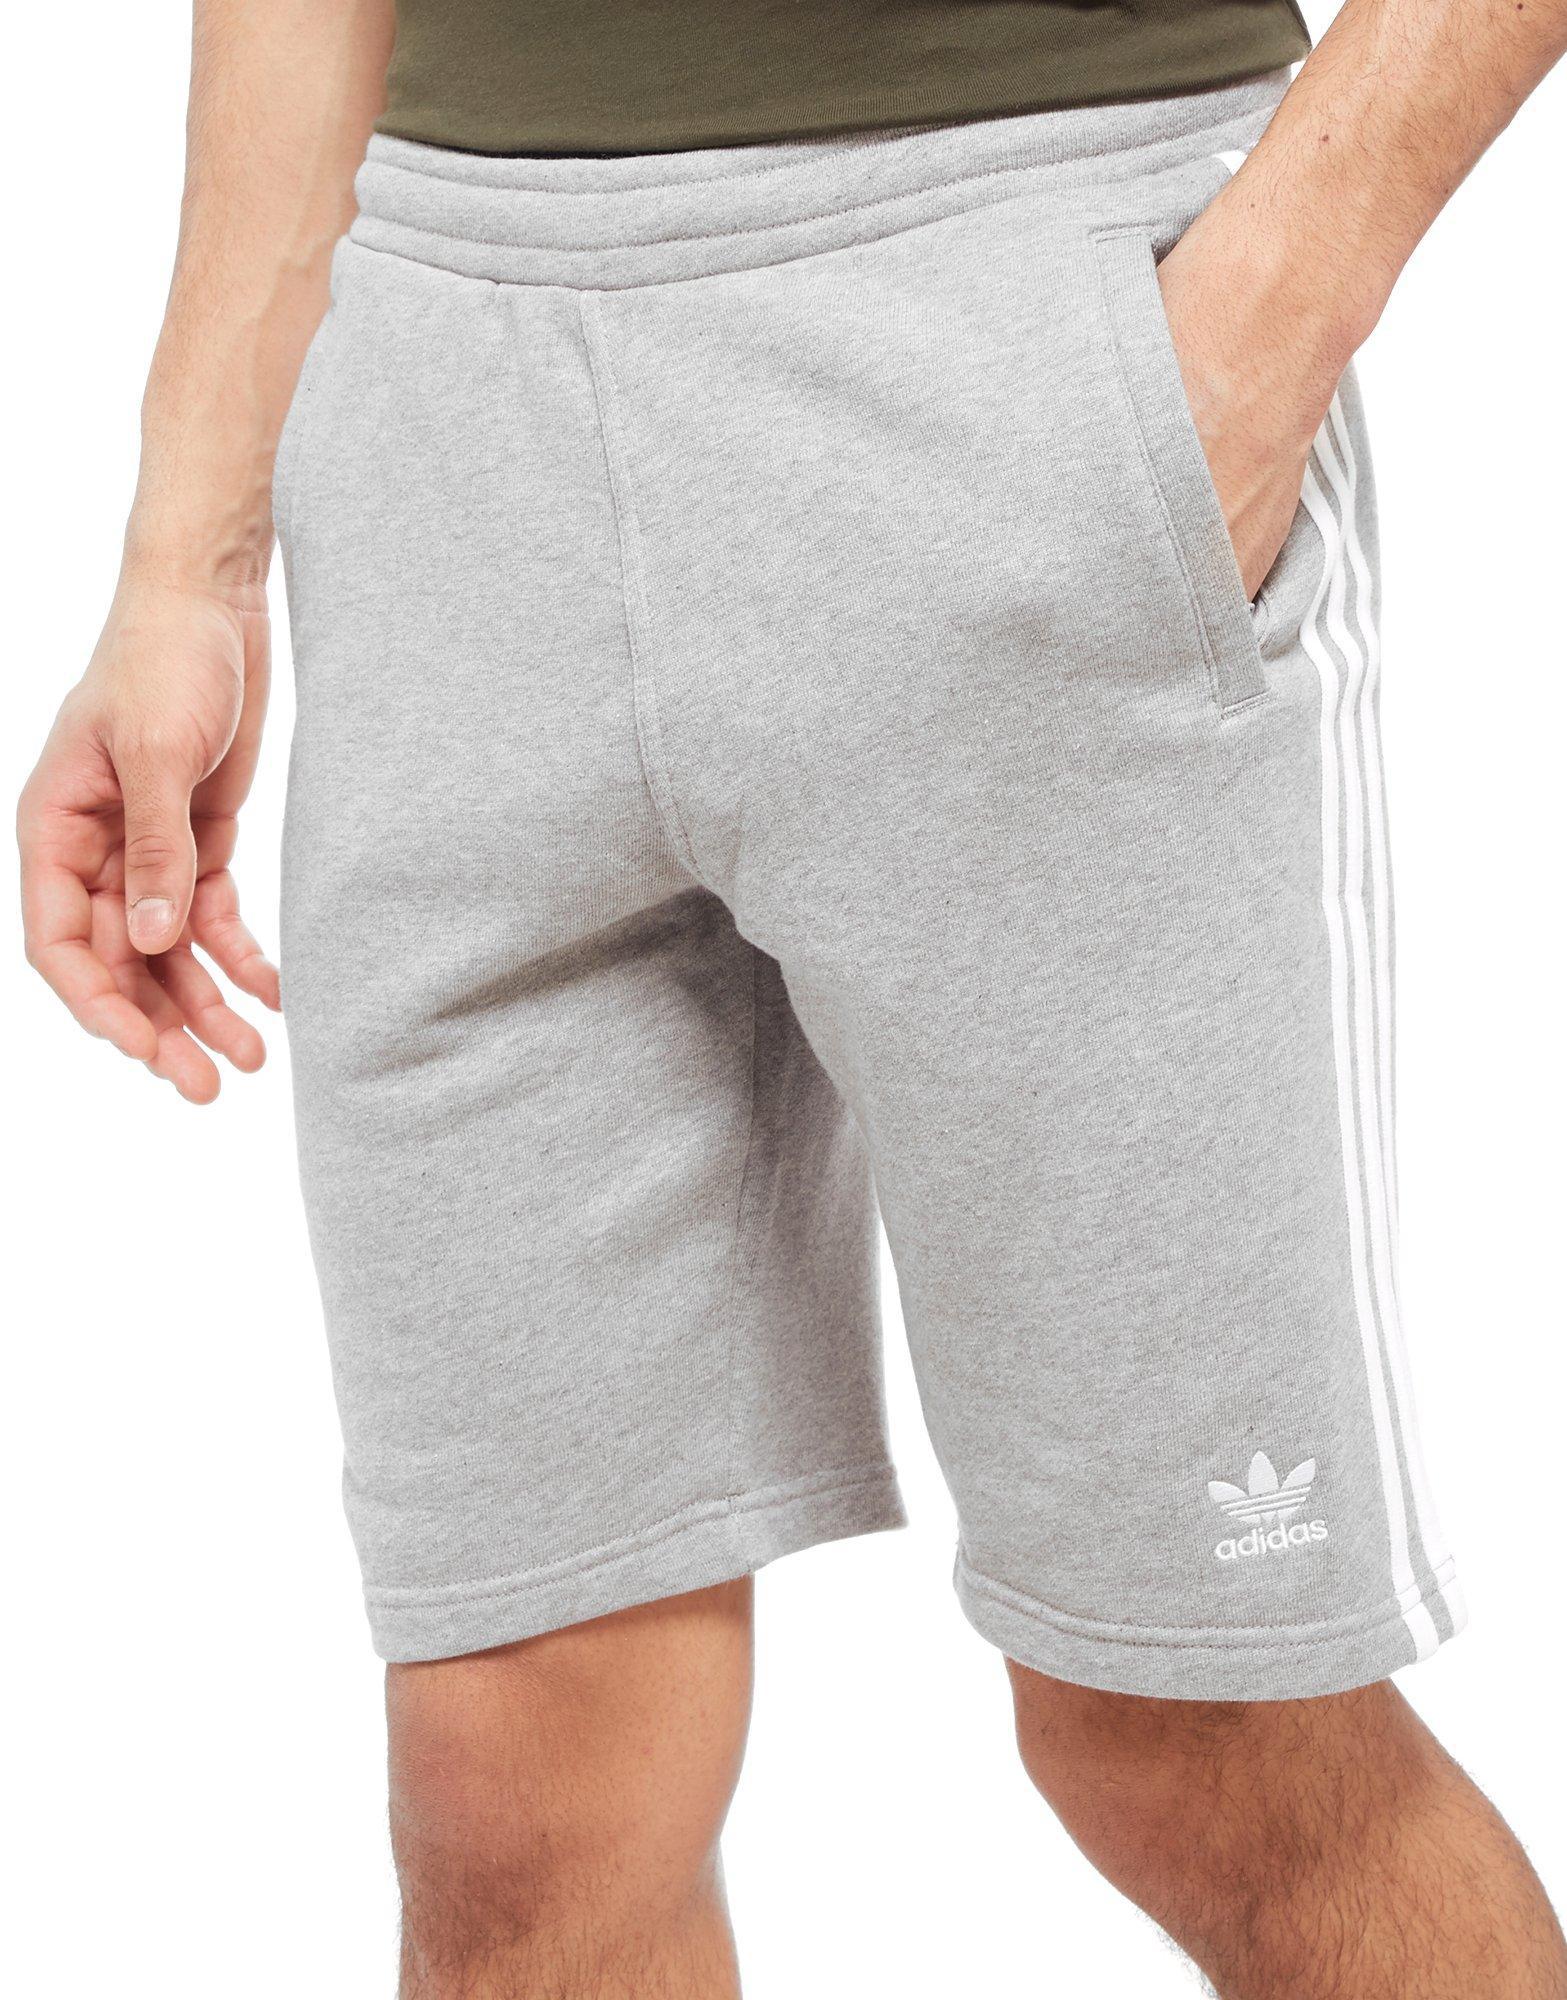 mens adidas fleece shorts